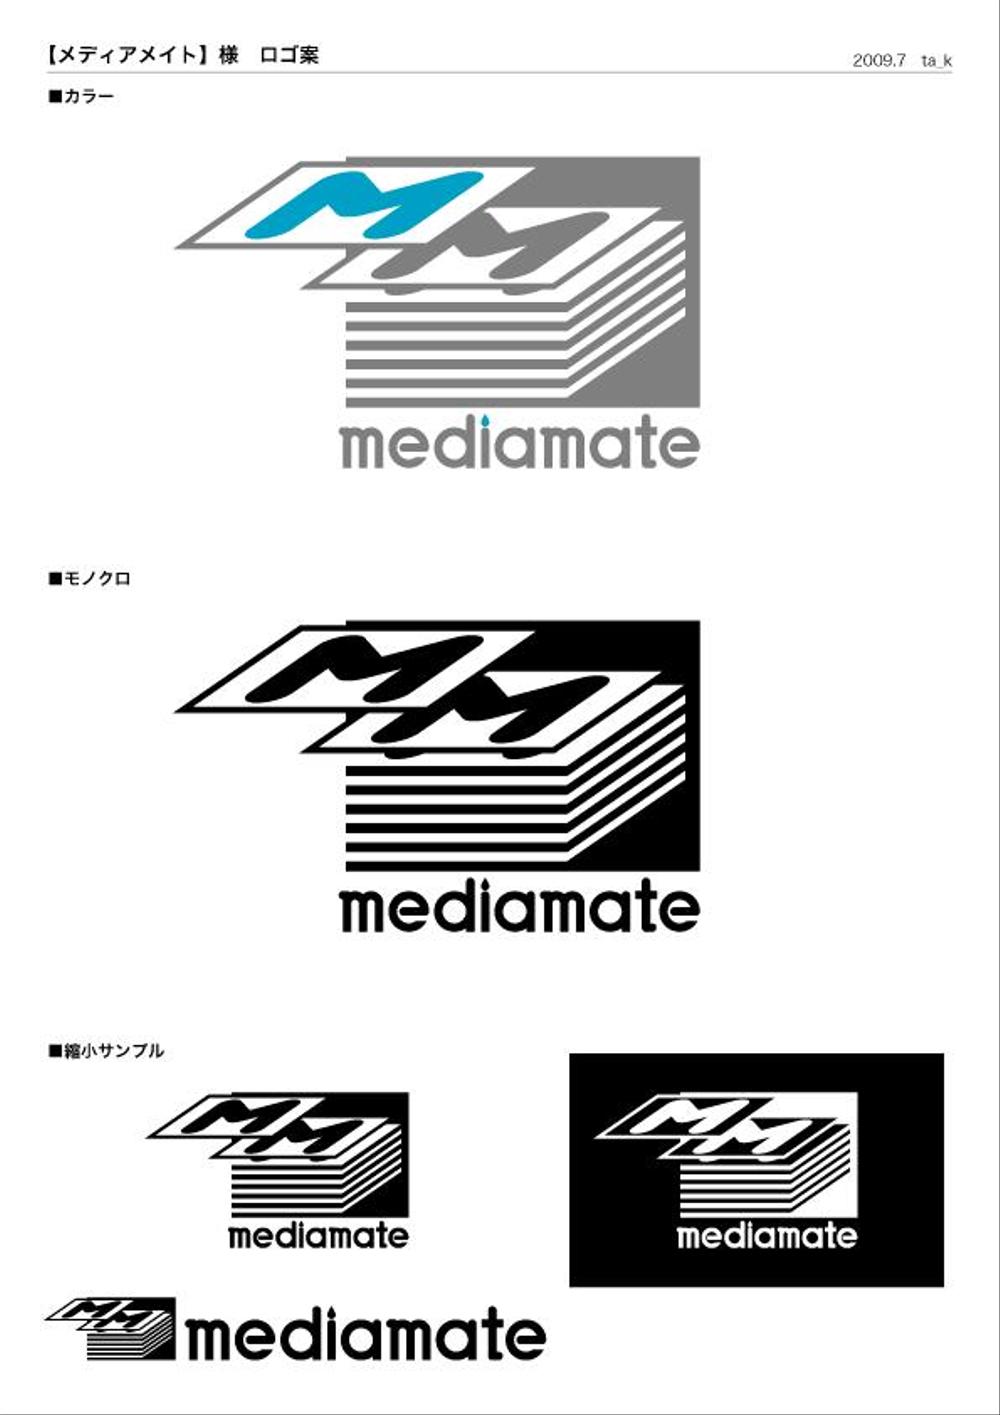 mediamate-ta_k.png